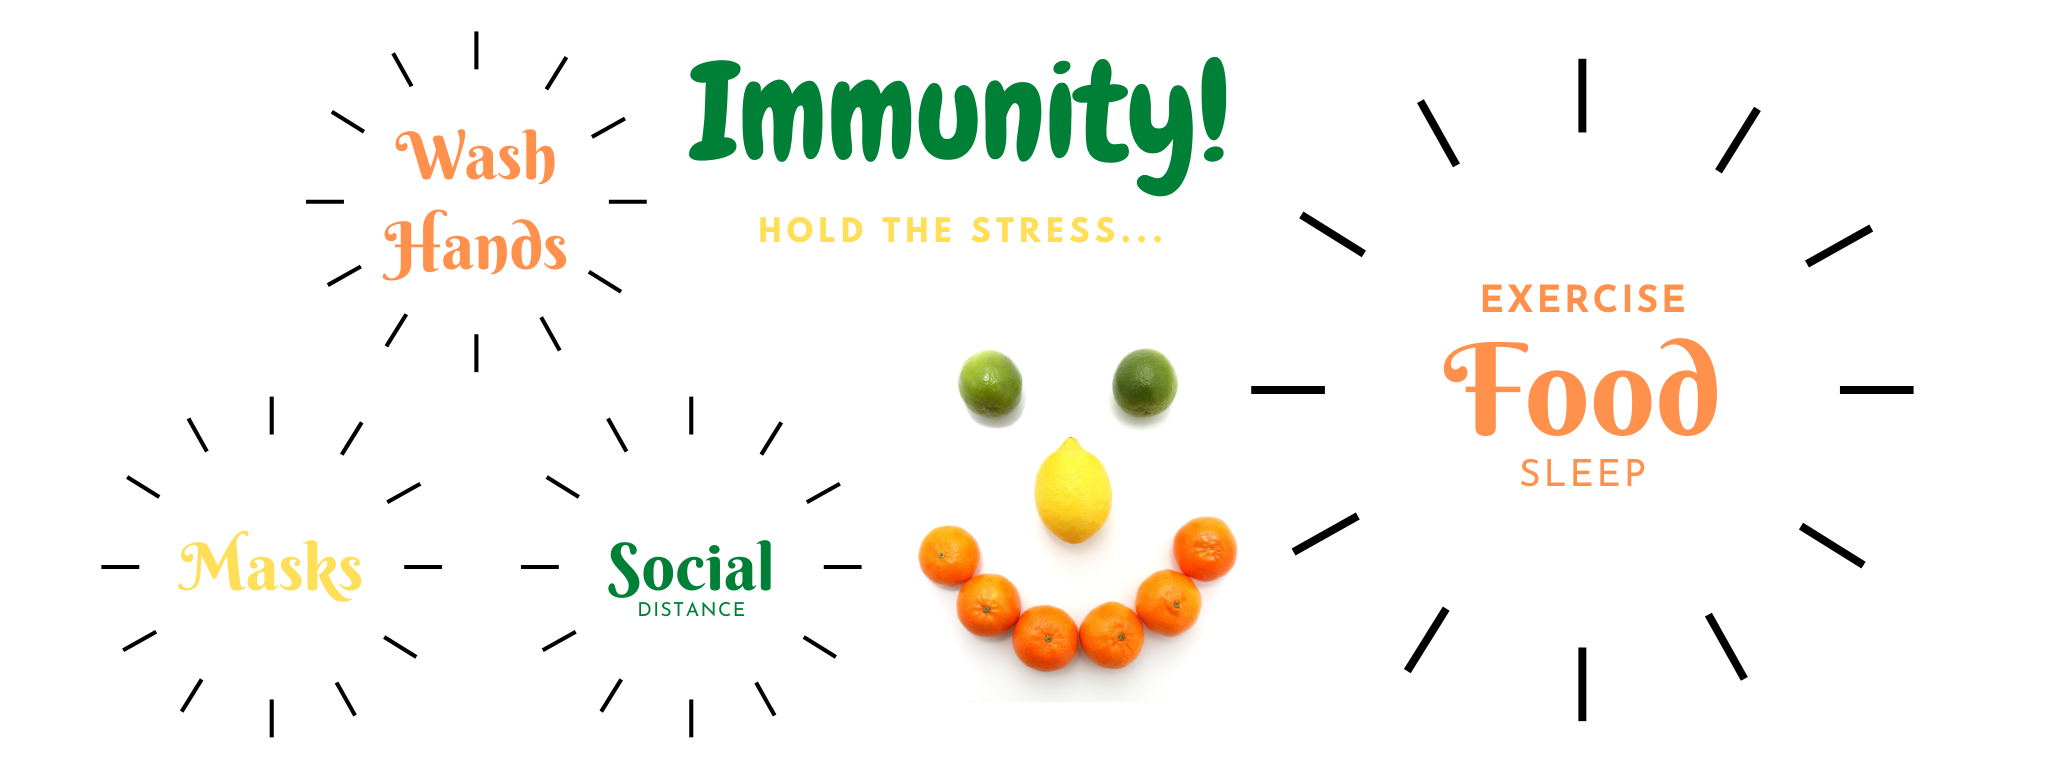 Immunity Keys Stress Masks Social Distance Wash Hands Food Exercise Sleep